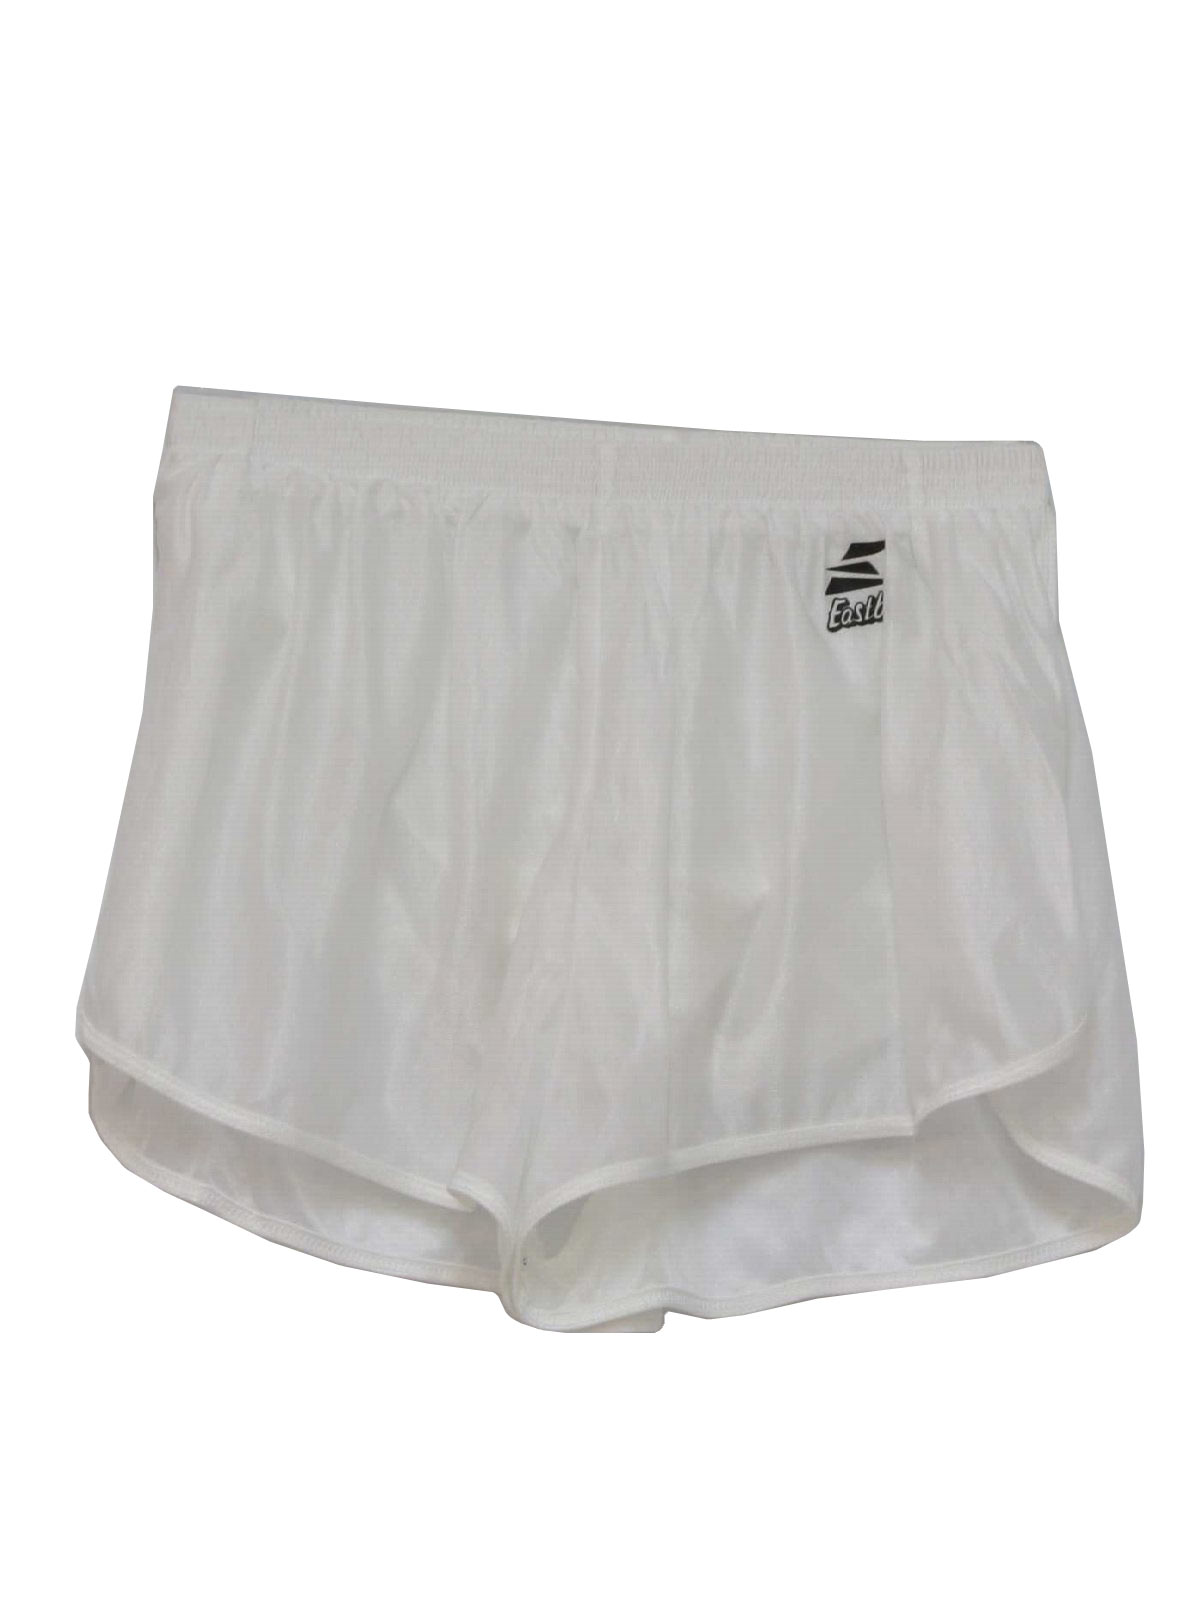 Retro 1990's Shorts (Eastbay) : 90s -Eastbay- Mens white polyester ...